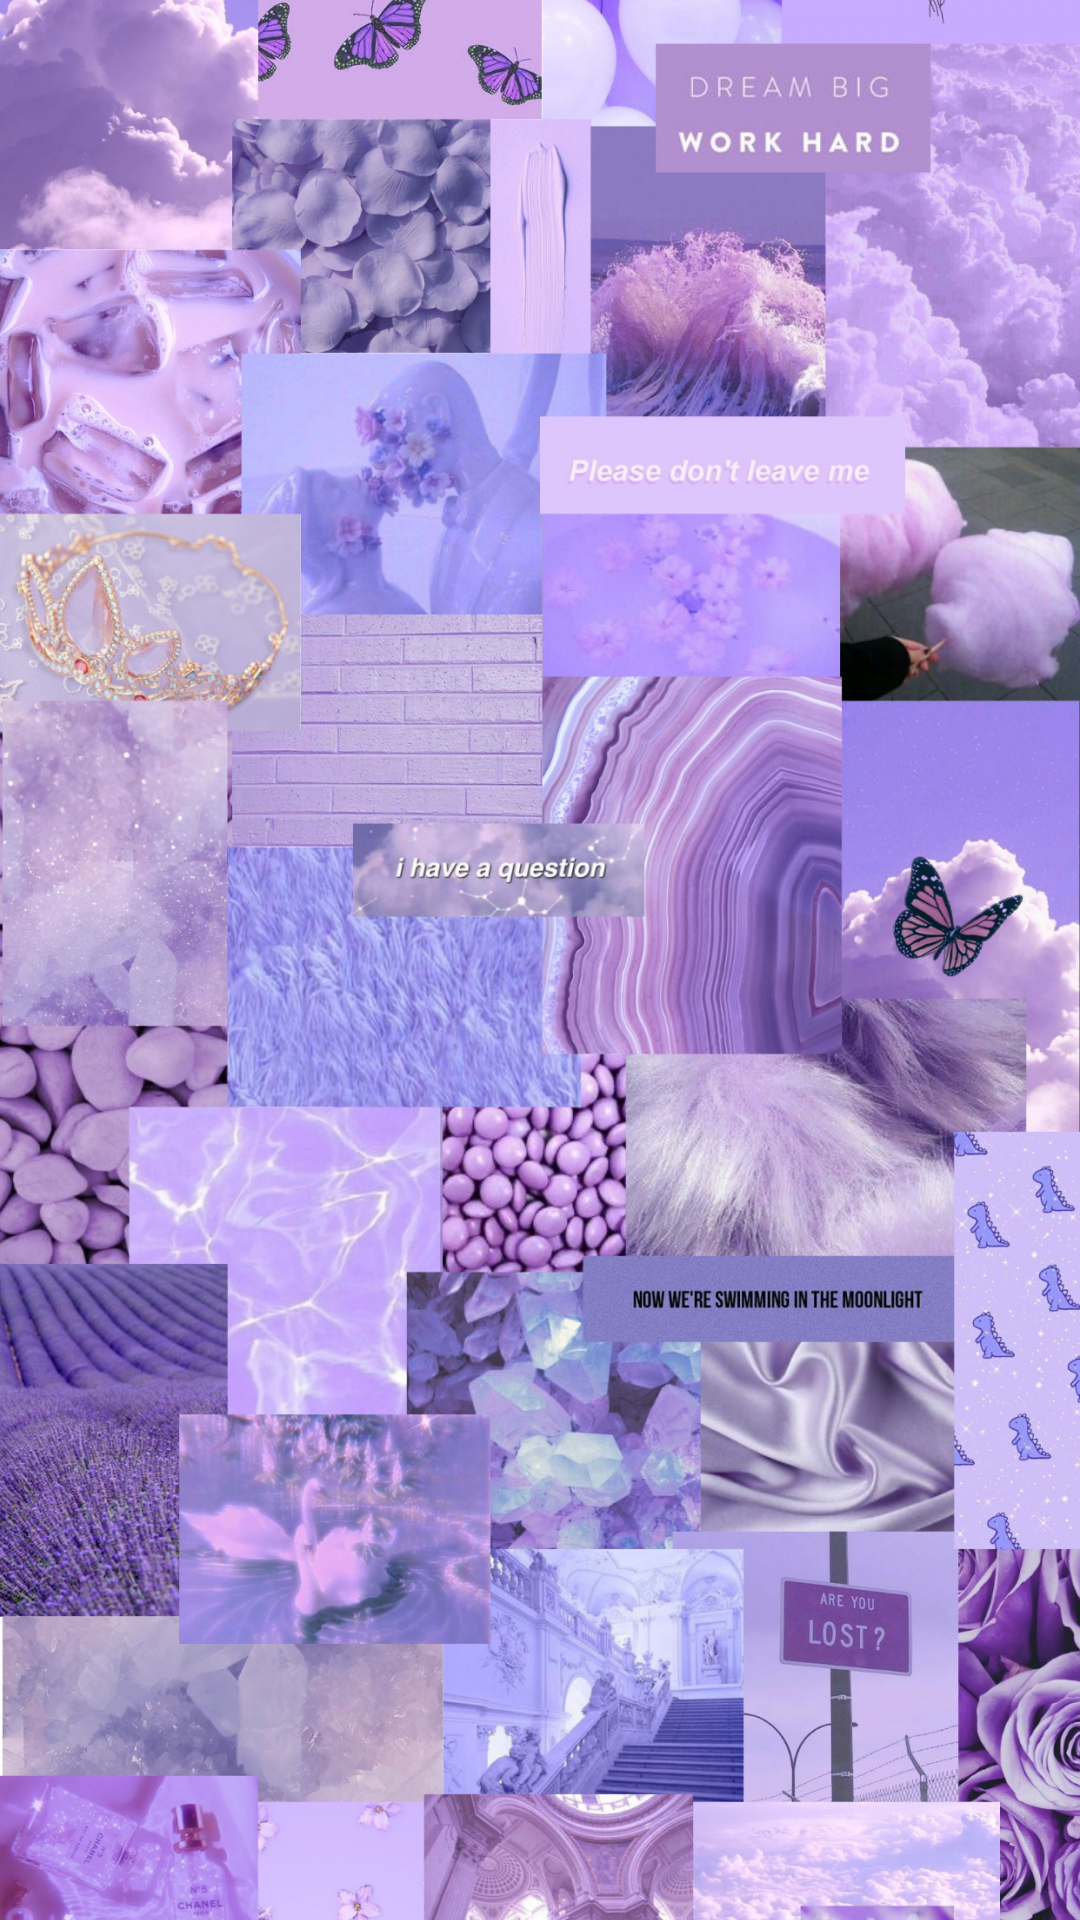 Aesthetic Light Purple Wallpapers